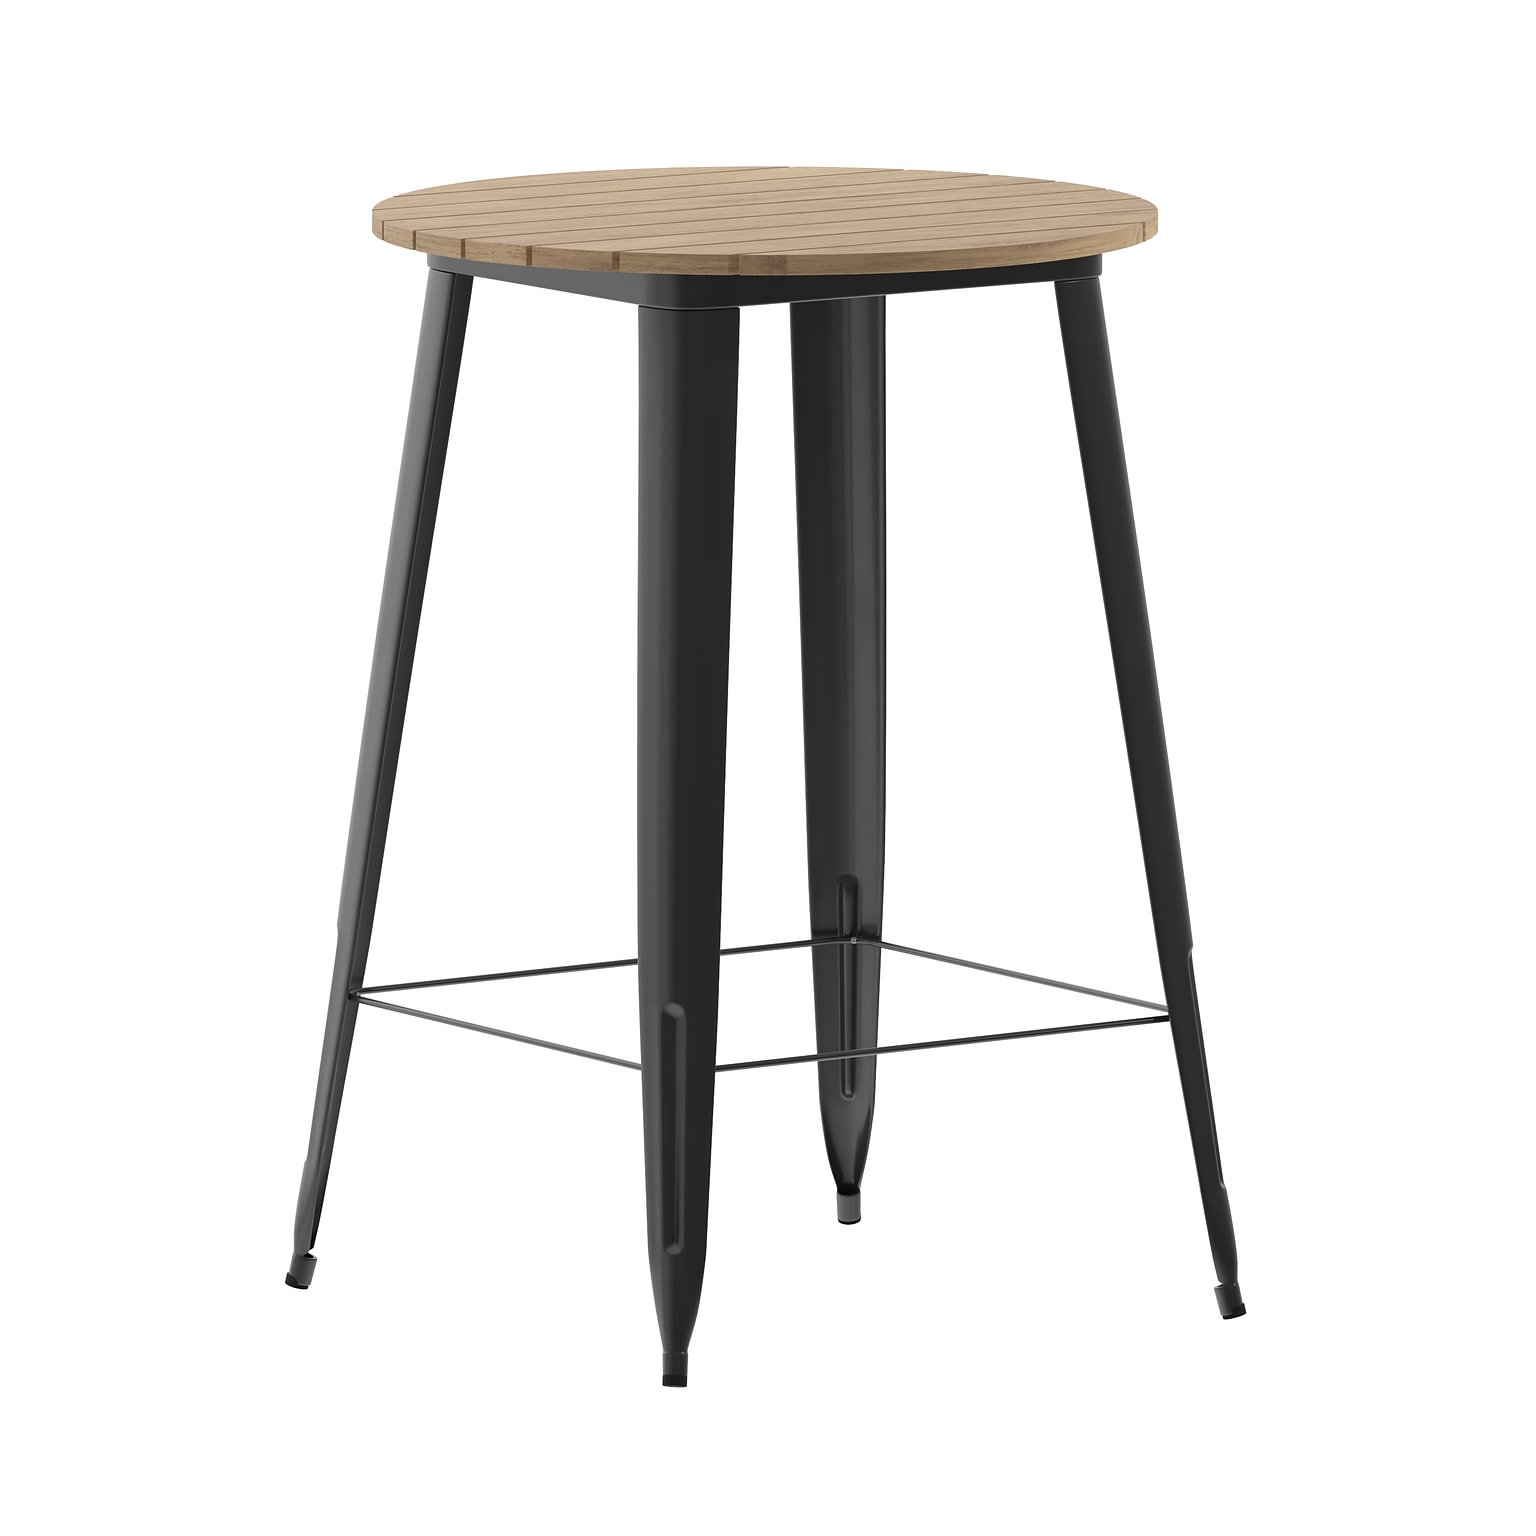 Flash Furniture Declan Indoor/Outdoor Bar Top Table, 42, Brown Top with Black Base (JJT14623H76BRBK)